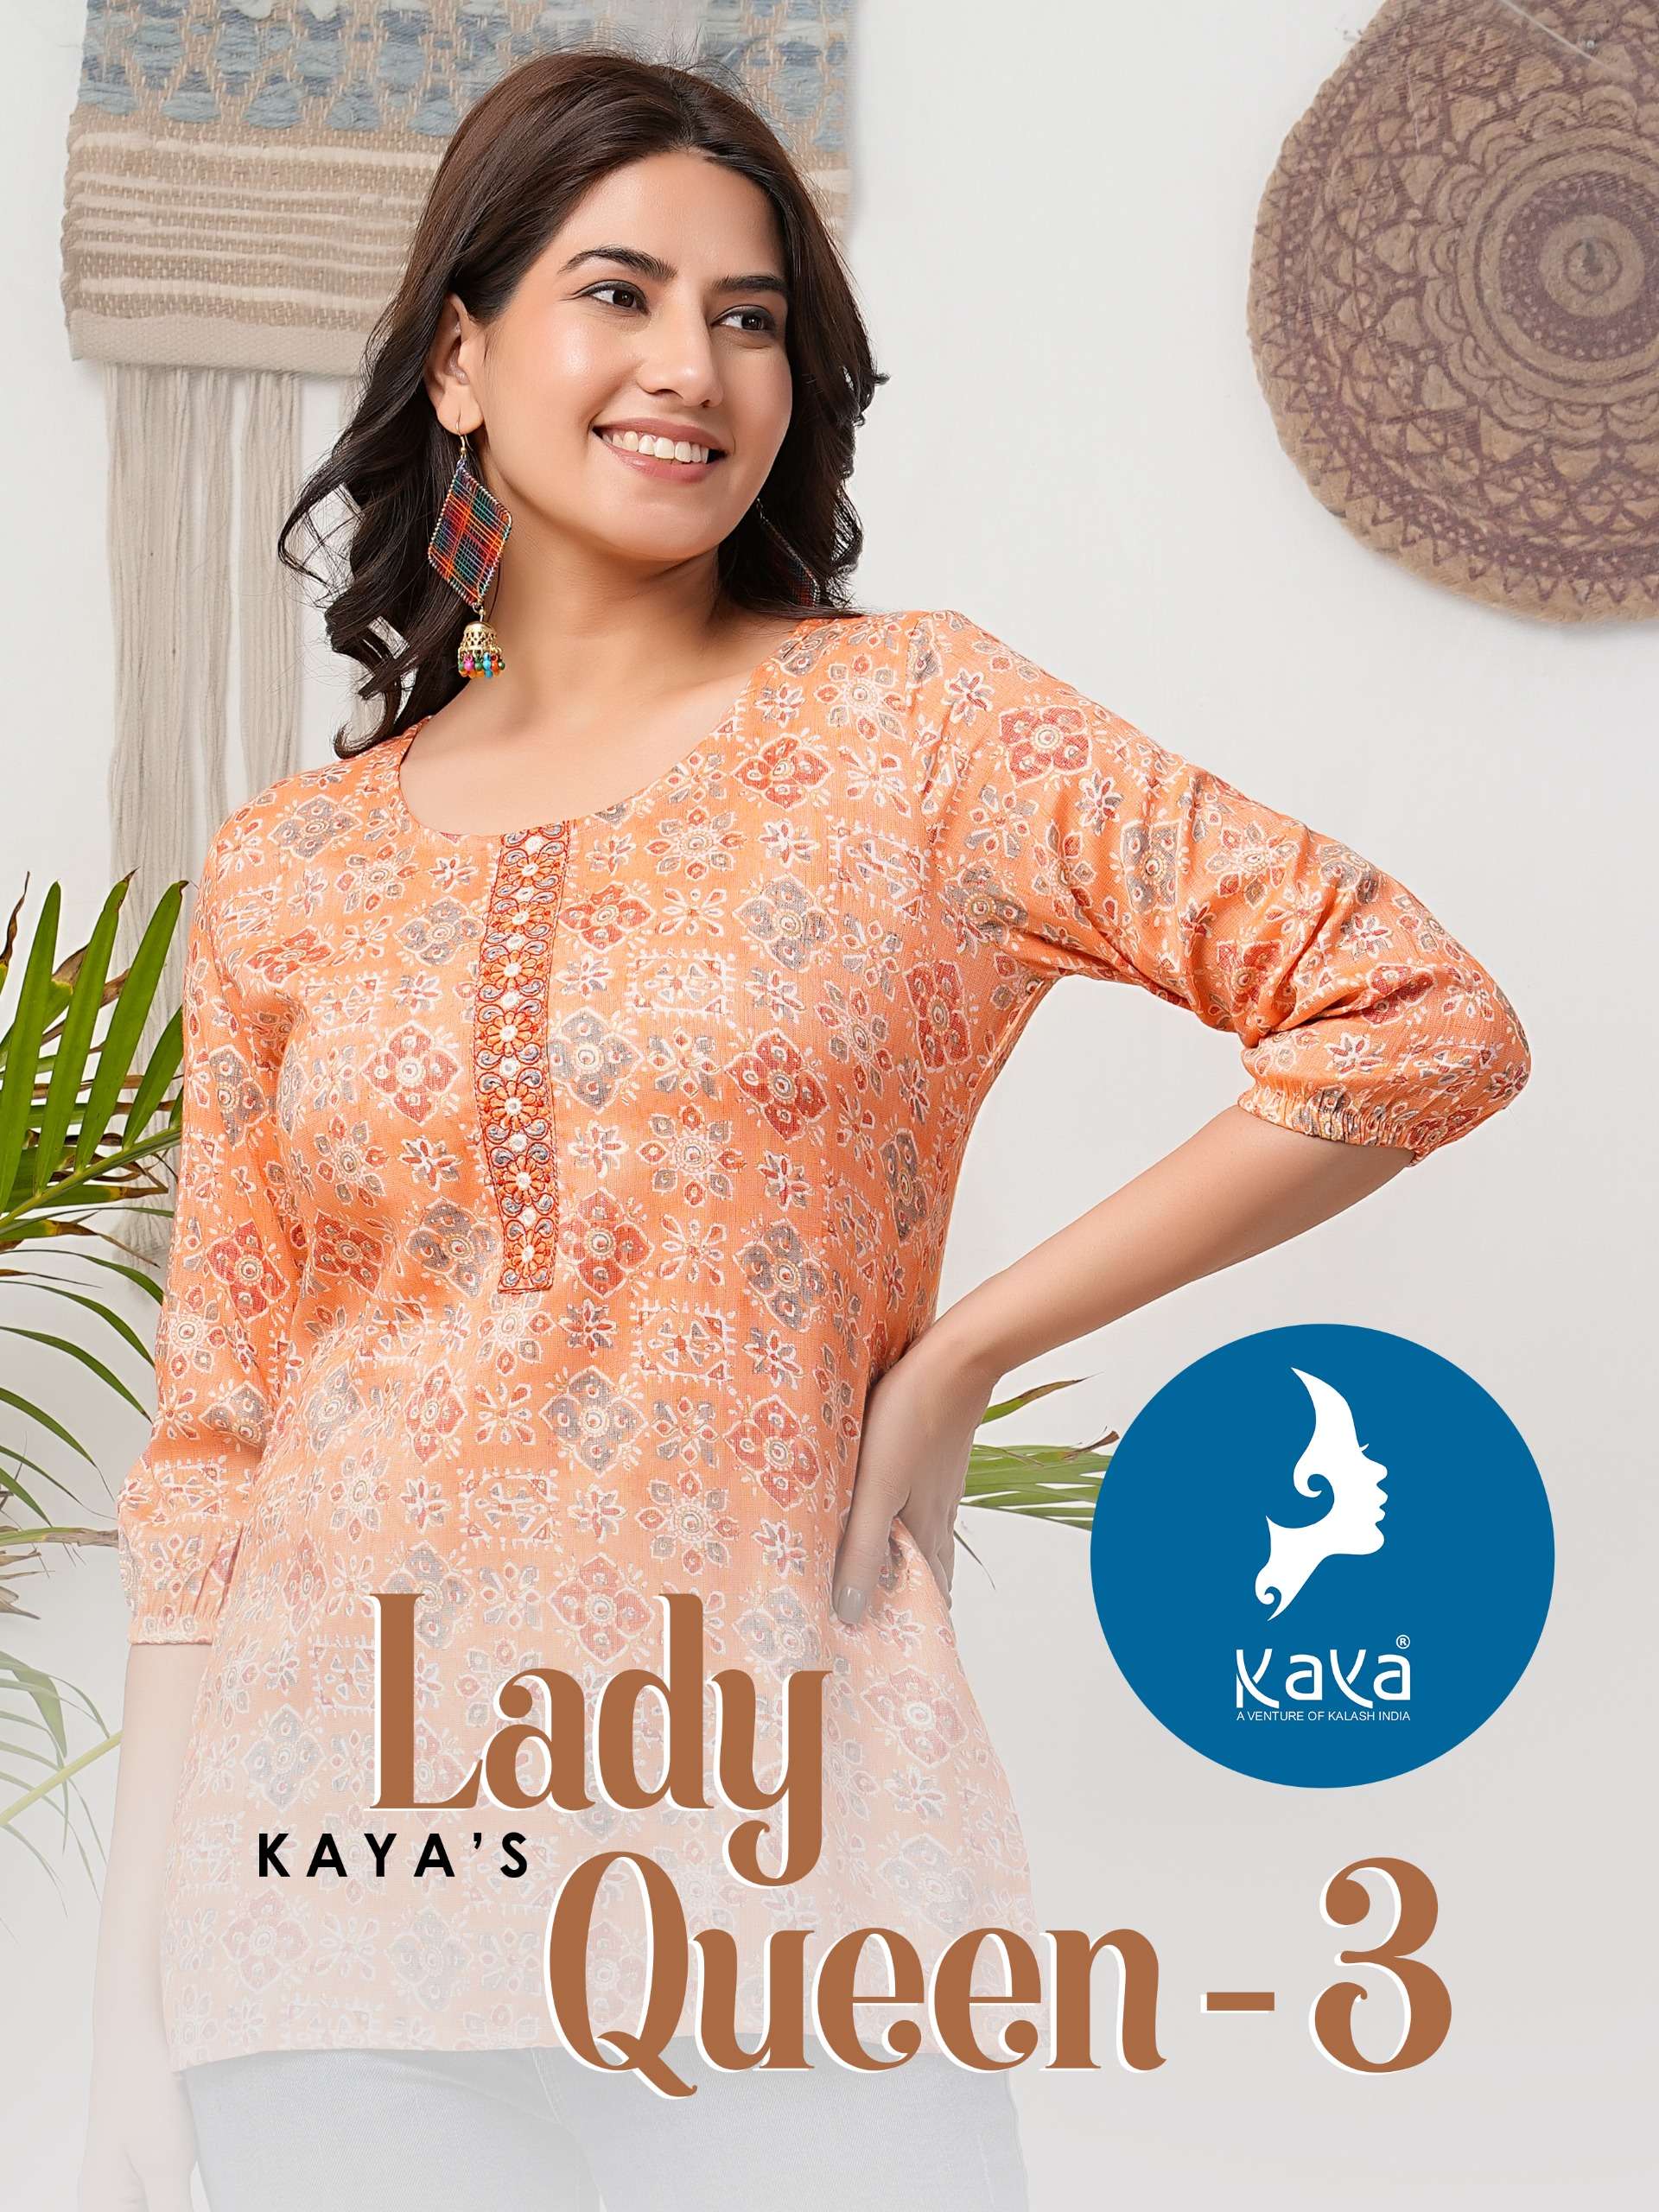 Kaya Lady Queen Vol 3 Printed Short tops Catalog Designs